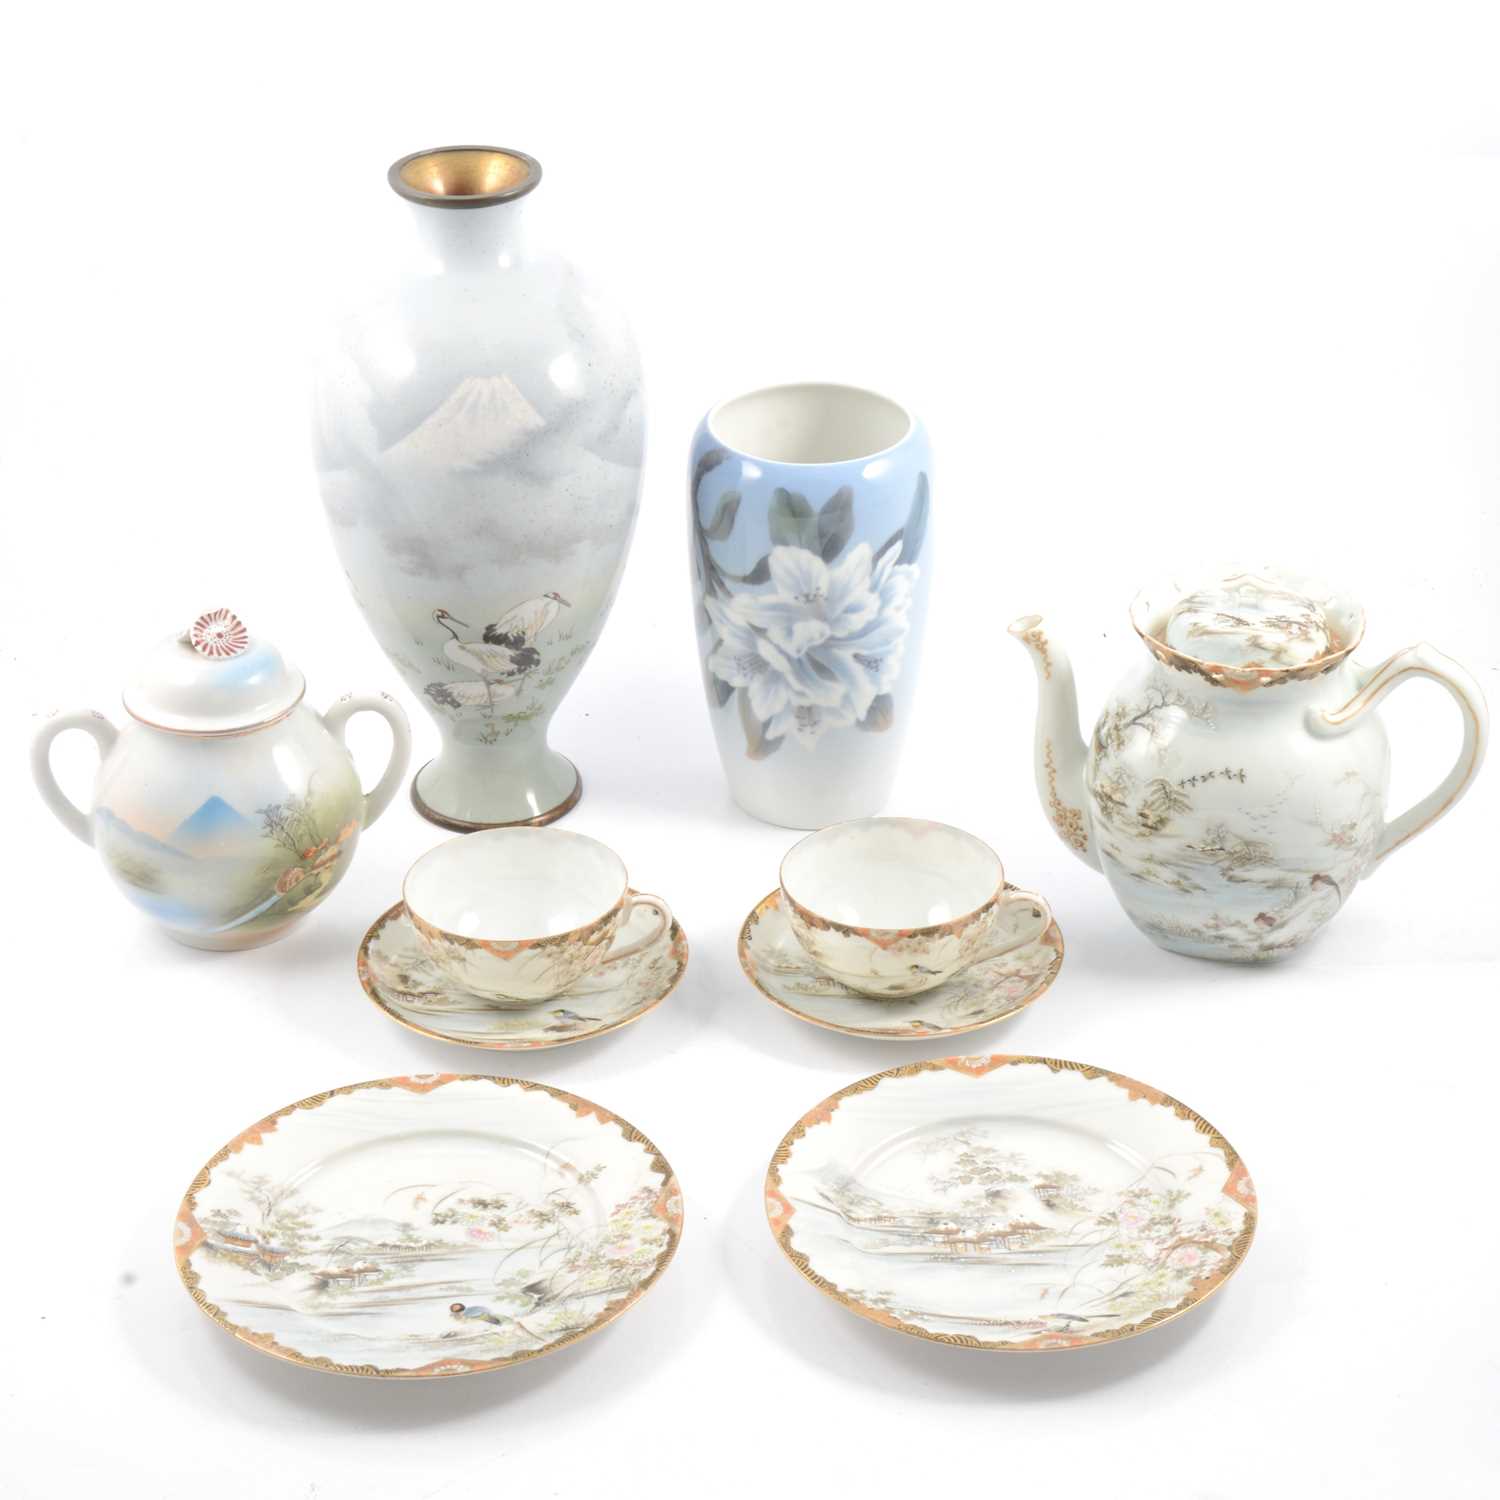 Lot 19 - Royal Copenhagen vase, Japanese cloisonne vase, teaset and other ceramics.